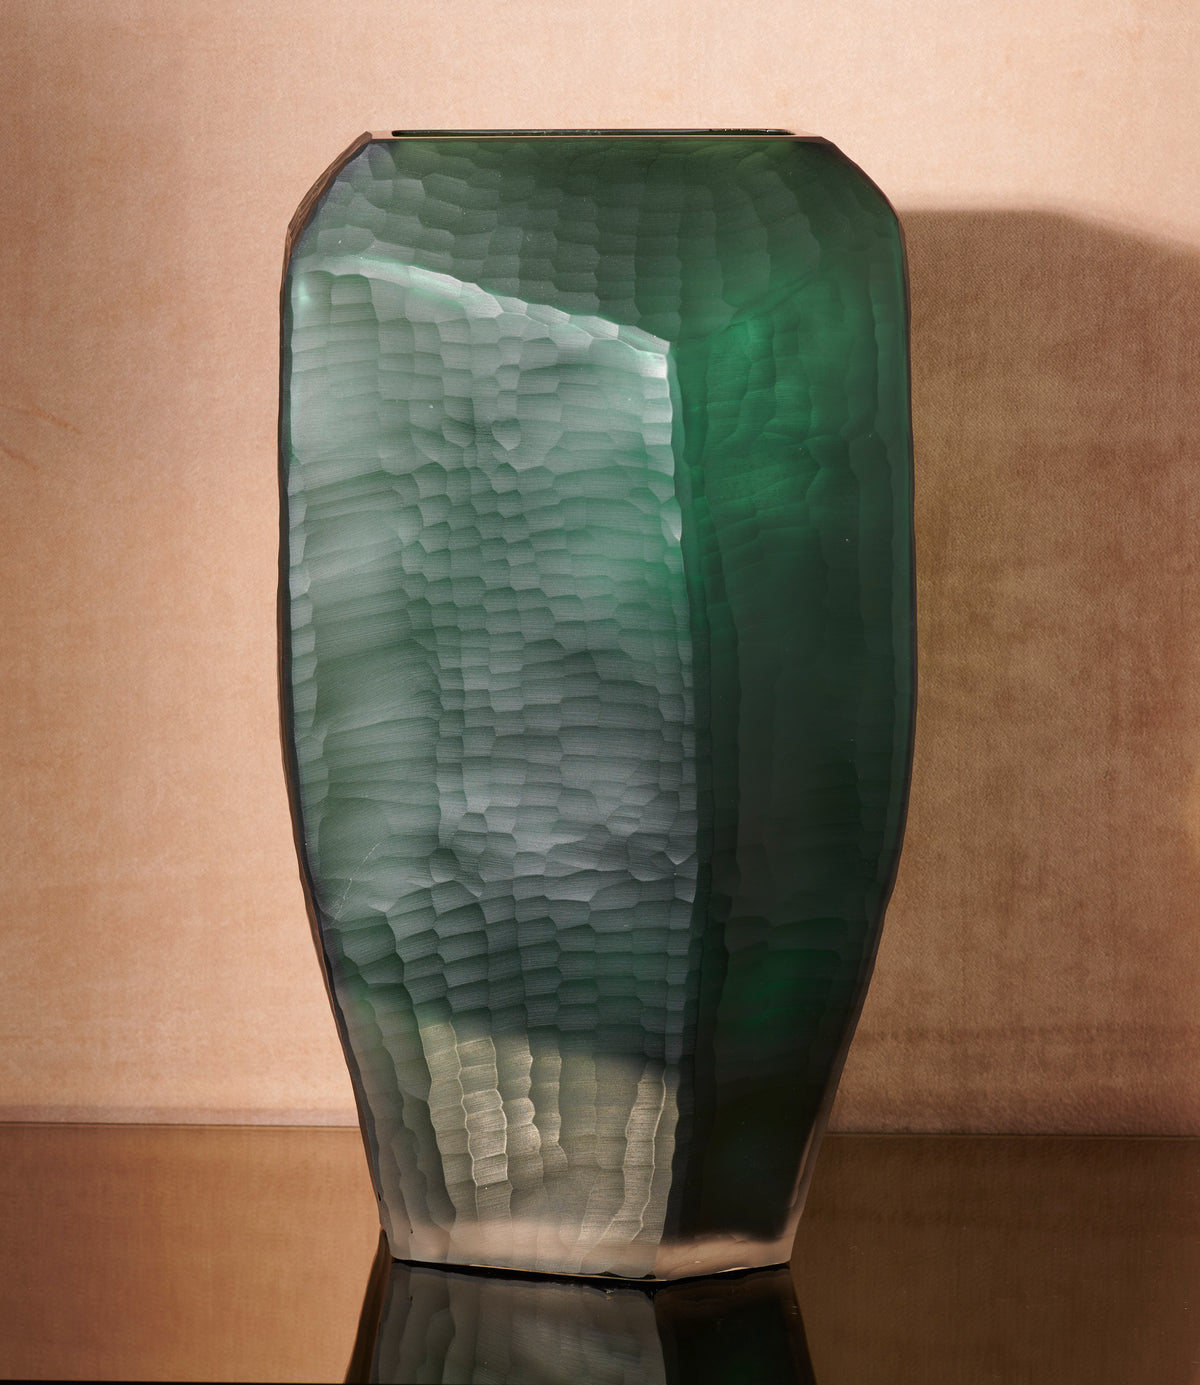 O4Home - Vase (eckig) aus geschnitztem Organe Glas in Saphirgrün